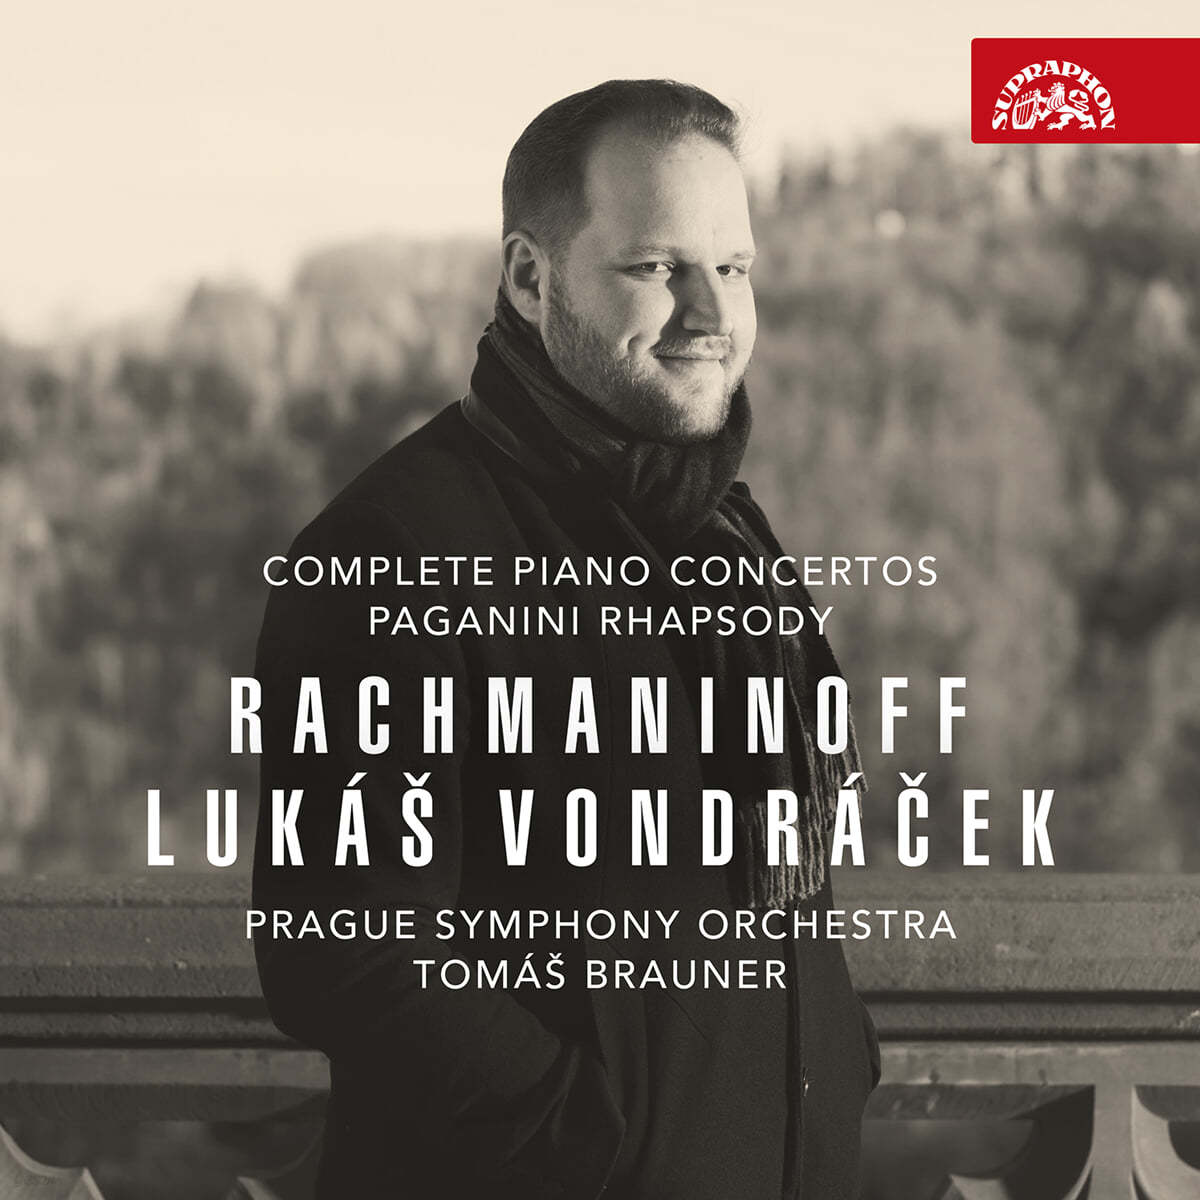 Lukas Vondracek 라흐마니노프: 피아노 협주곡 전곡, 파가니니 랩소디 (Rachmaninoff: Complete Piano Concertos, Paganini Rhapsody)